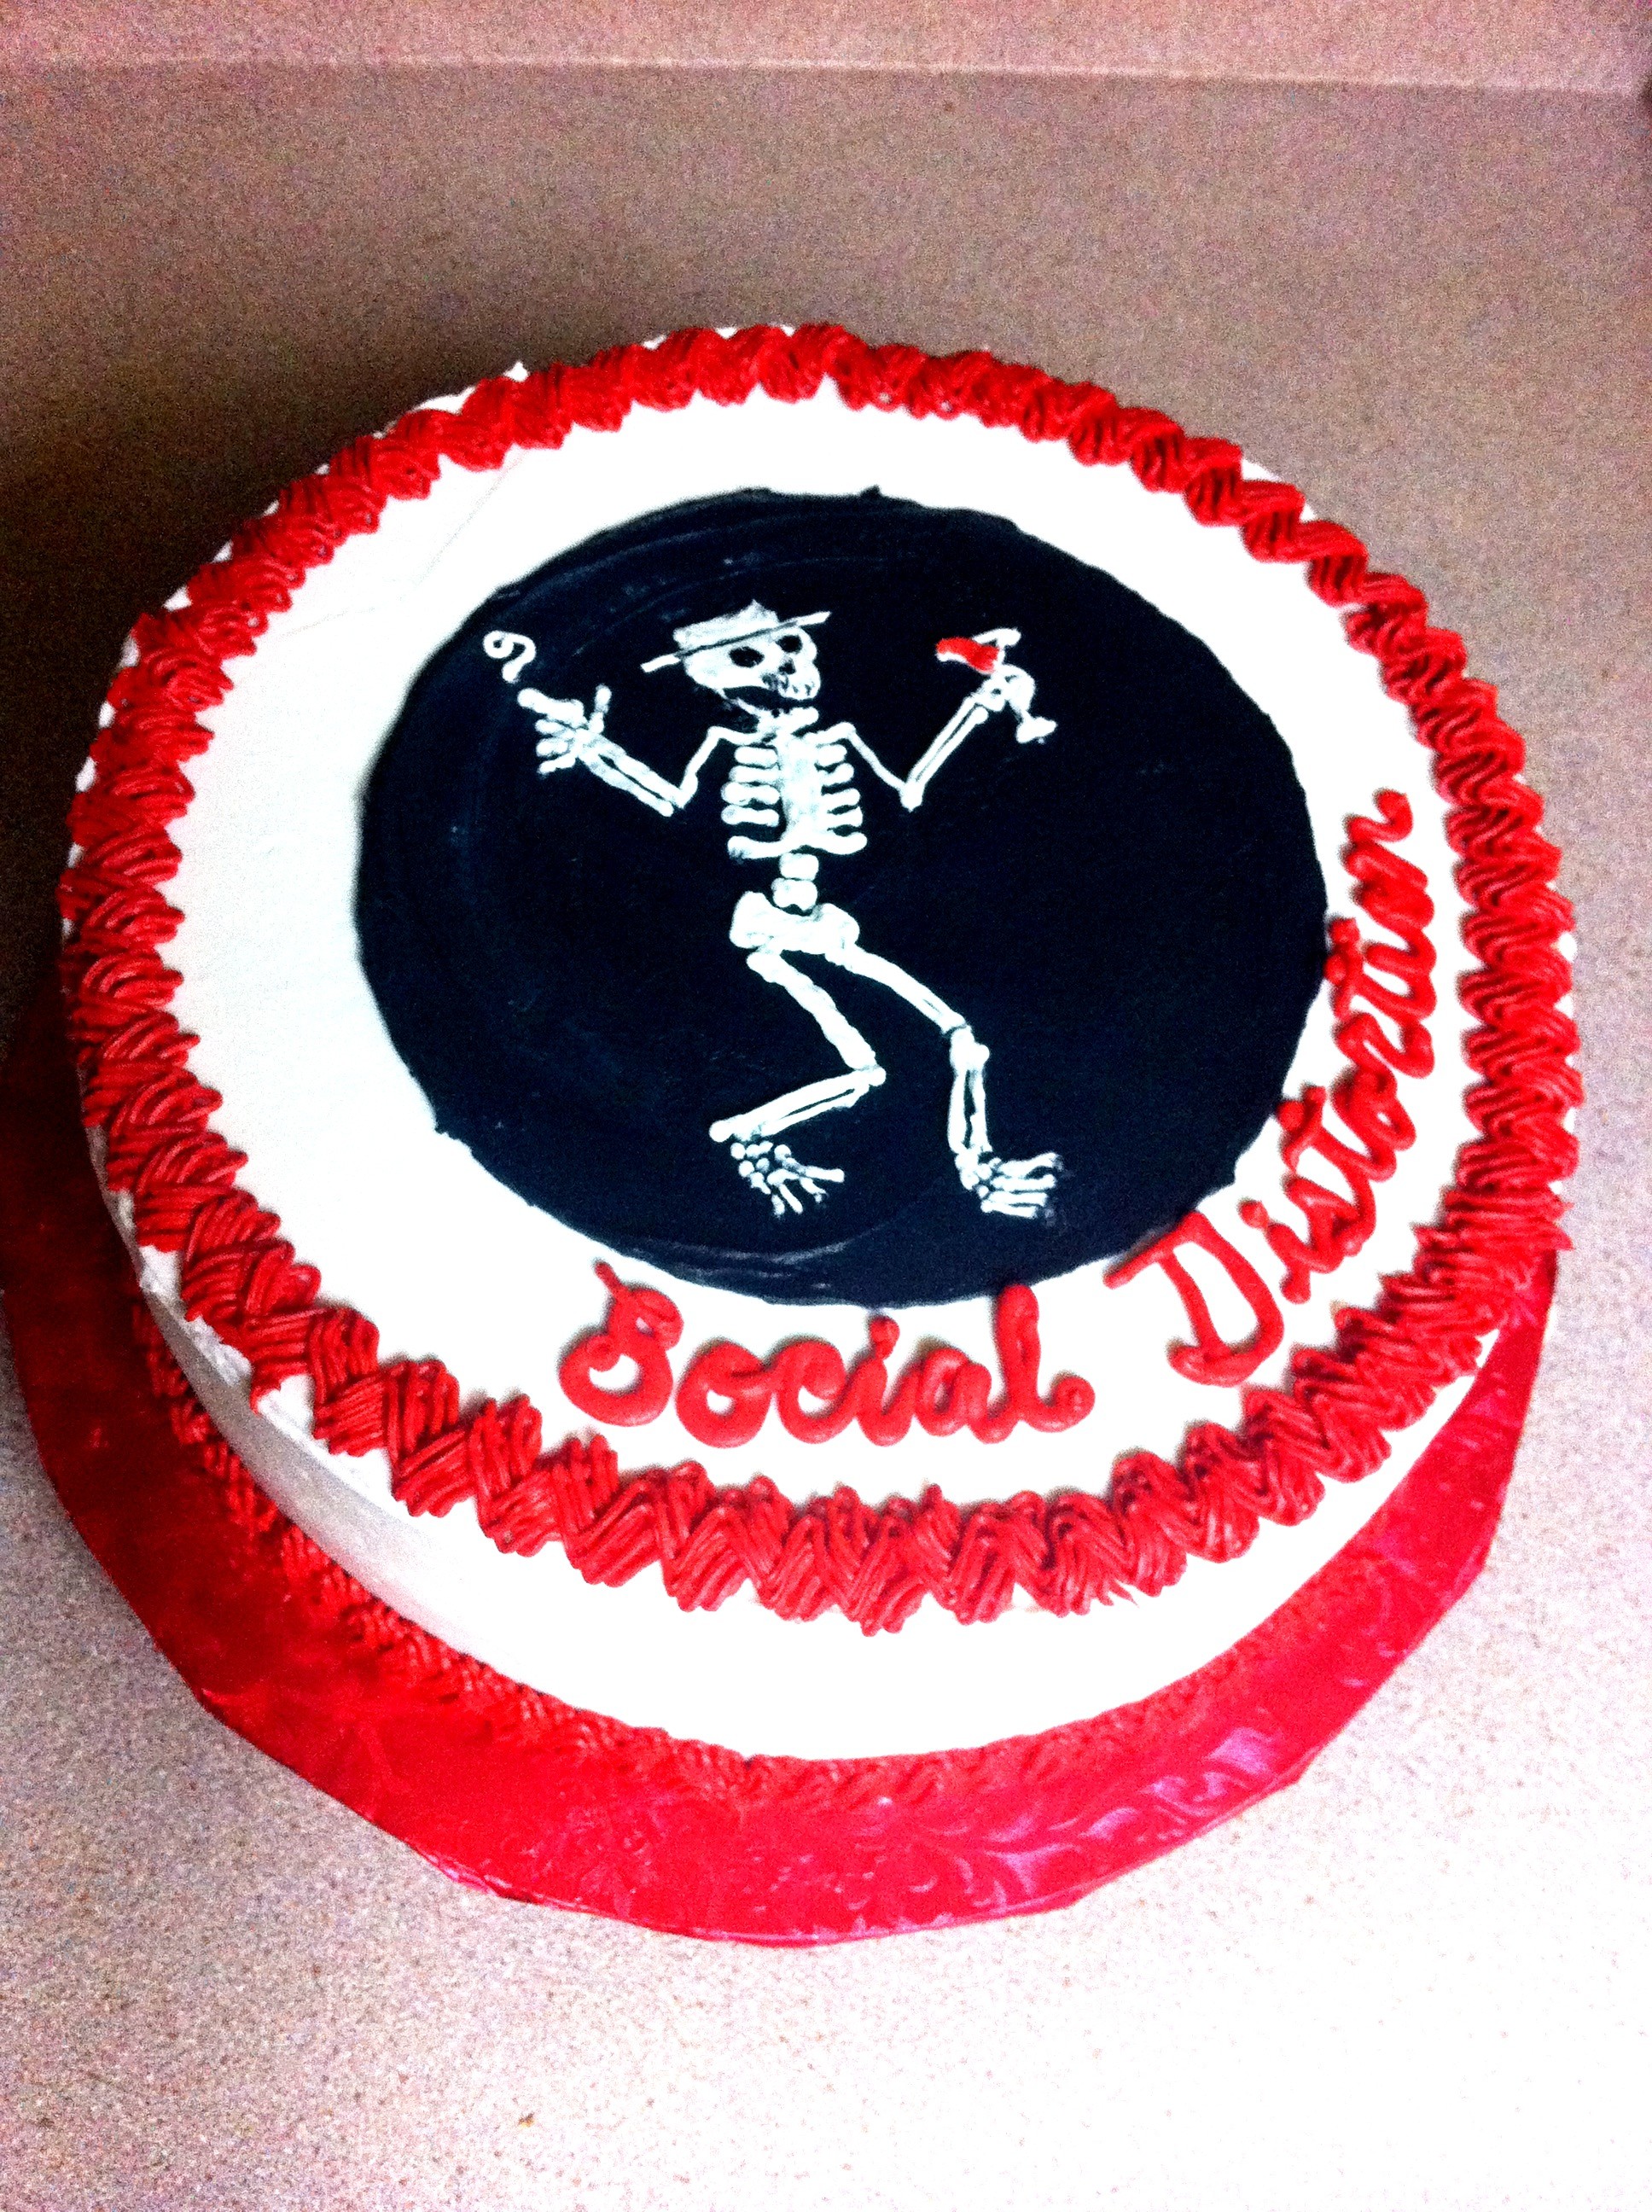 1936x2592 Social Distortion Birthday Cakes 